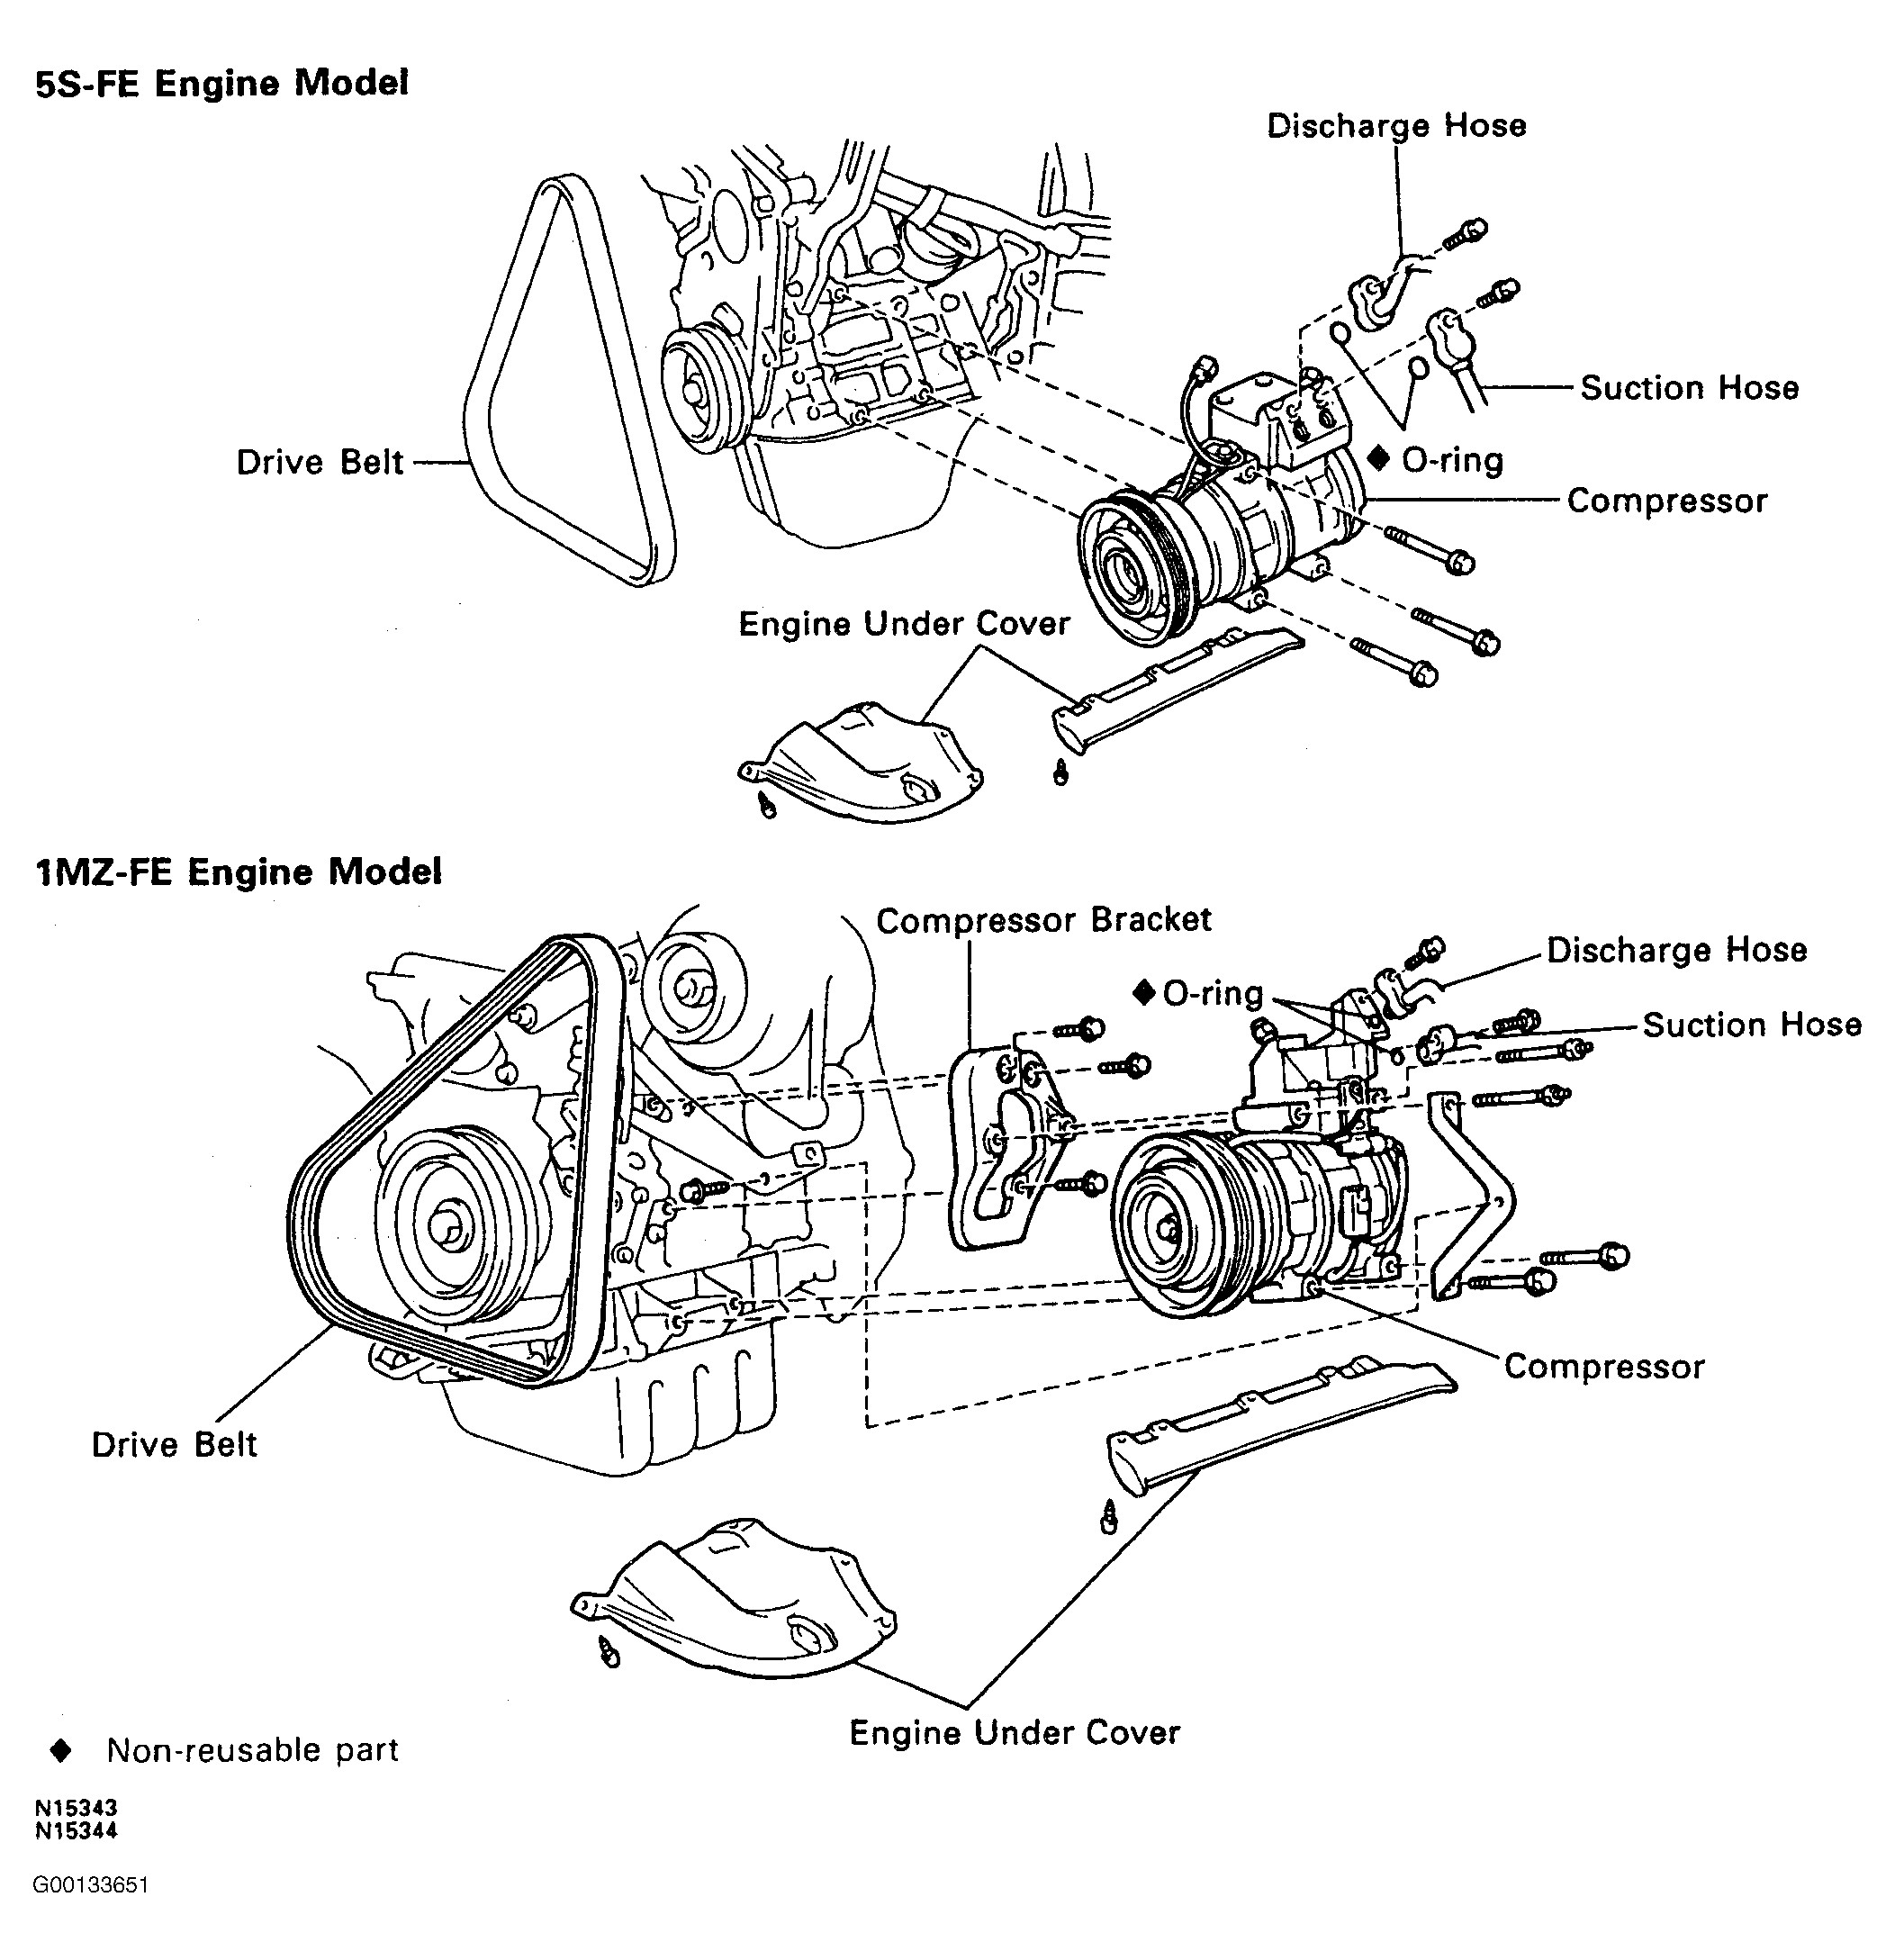 1994 toyota Camry Engine Diagram 95 toyota Camry Engine Diagram toyota Wiring Diagrams Instructions